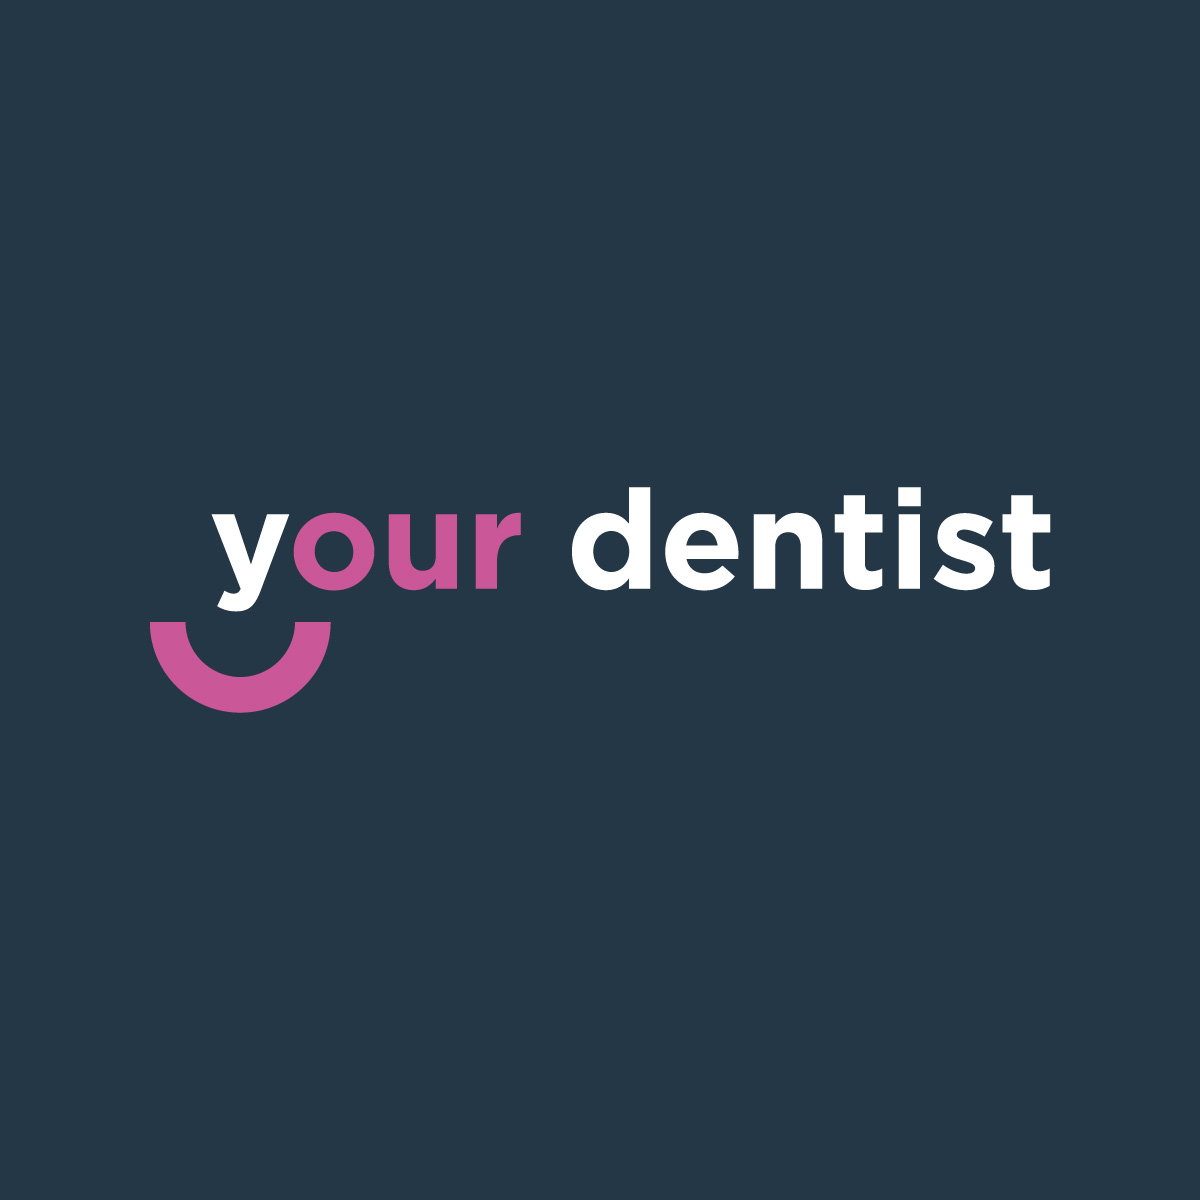 nohands-logo-design-your-dentist